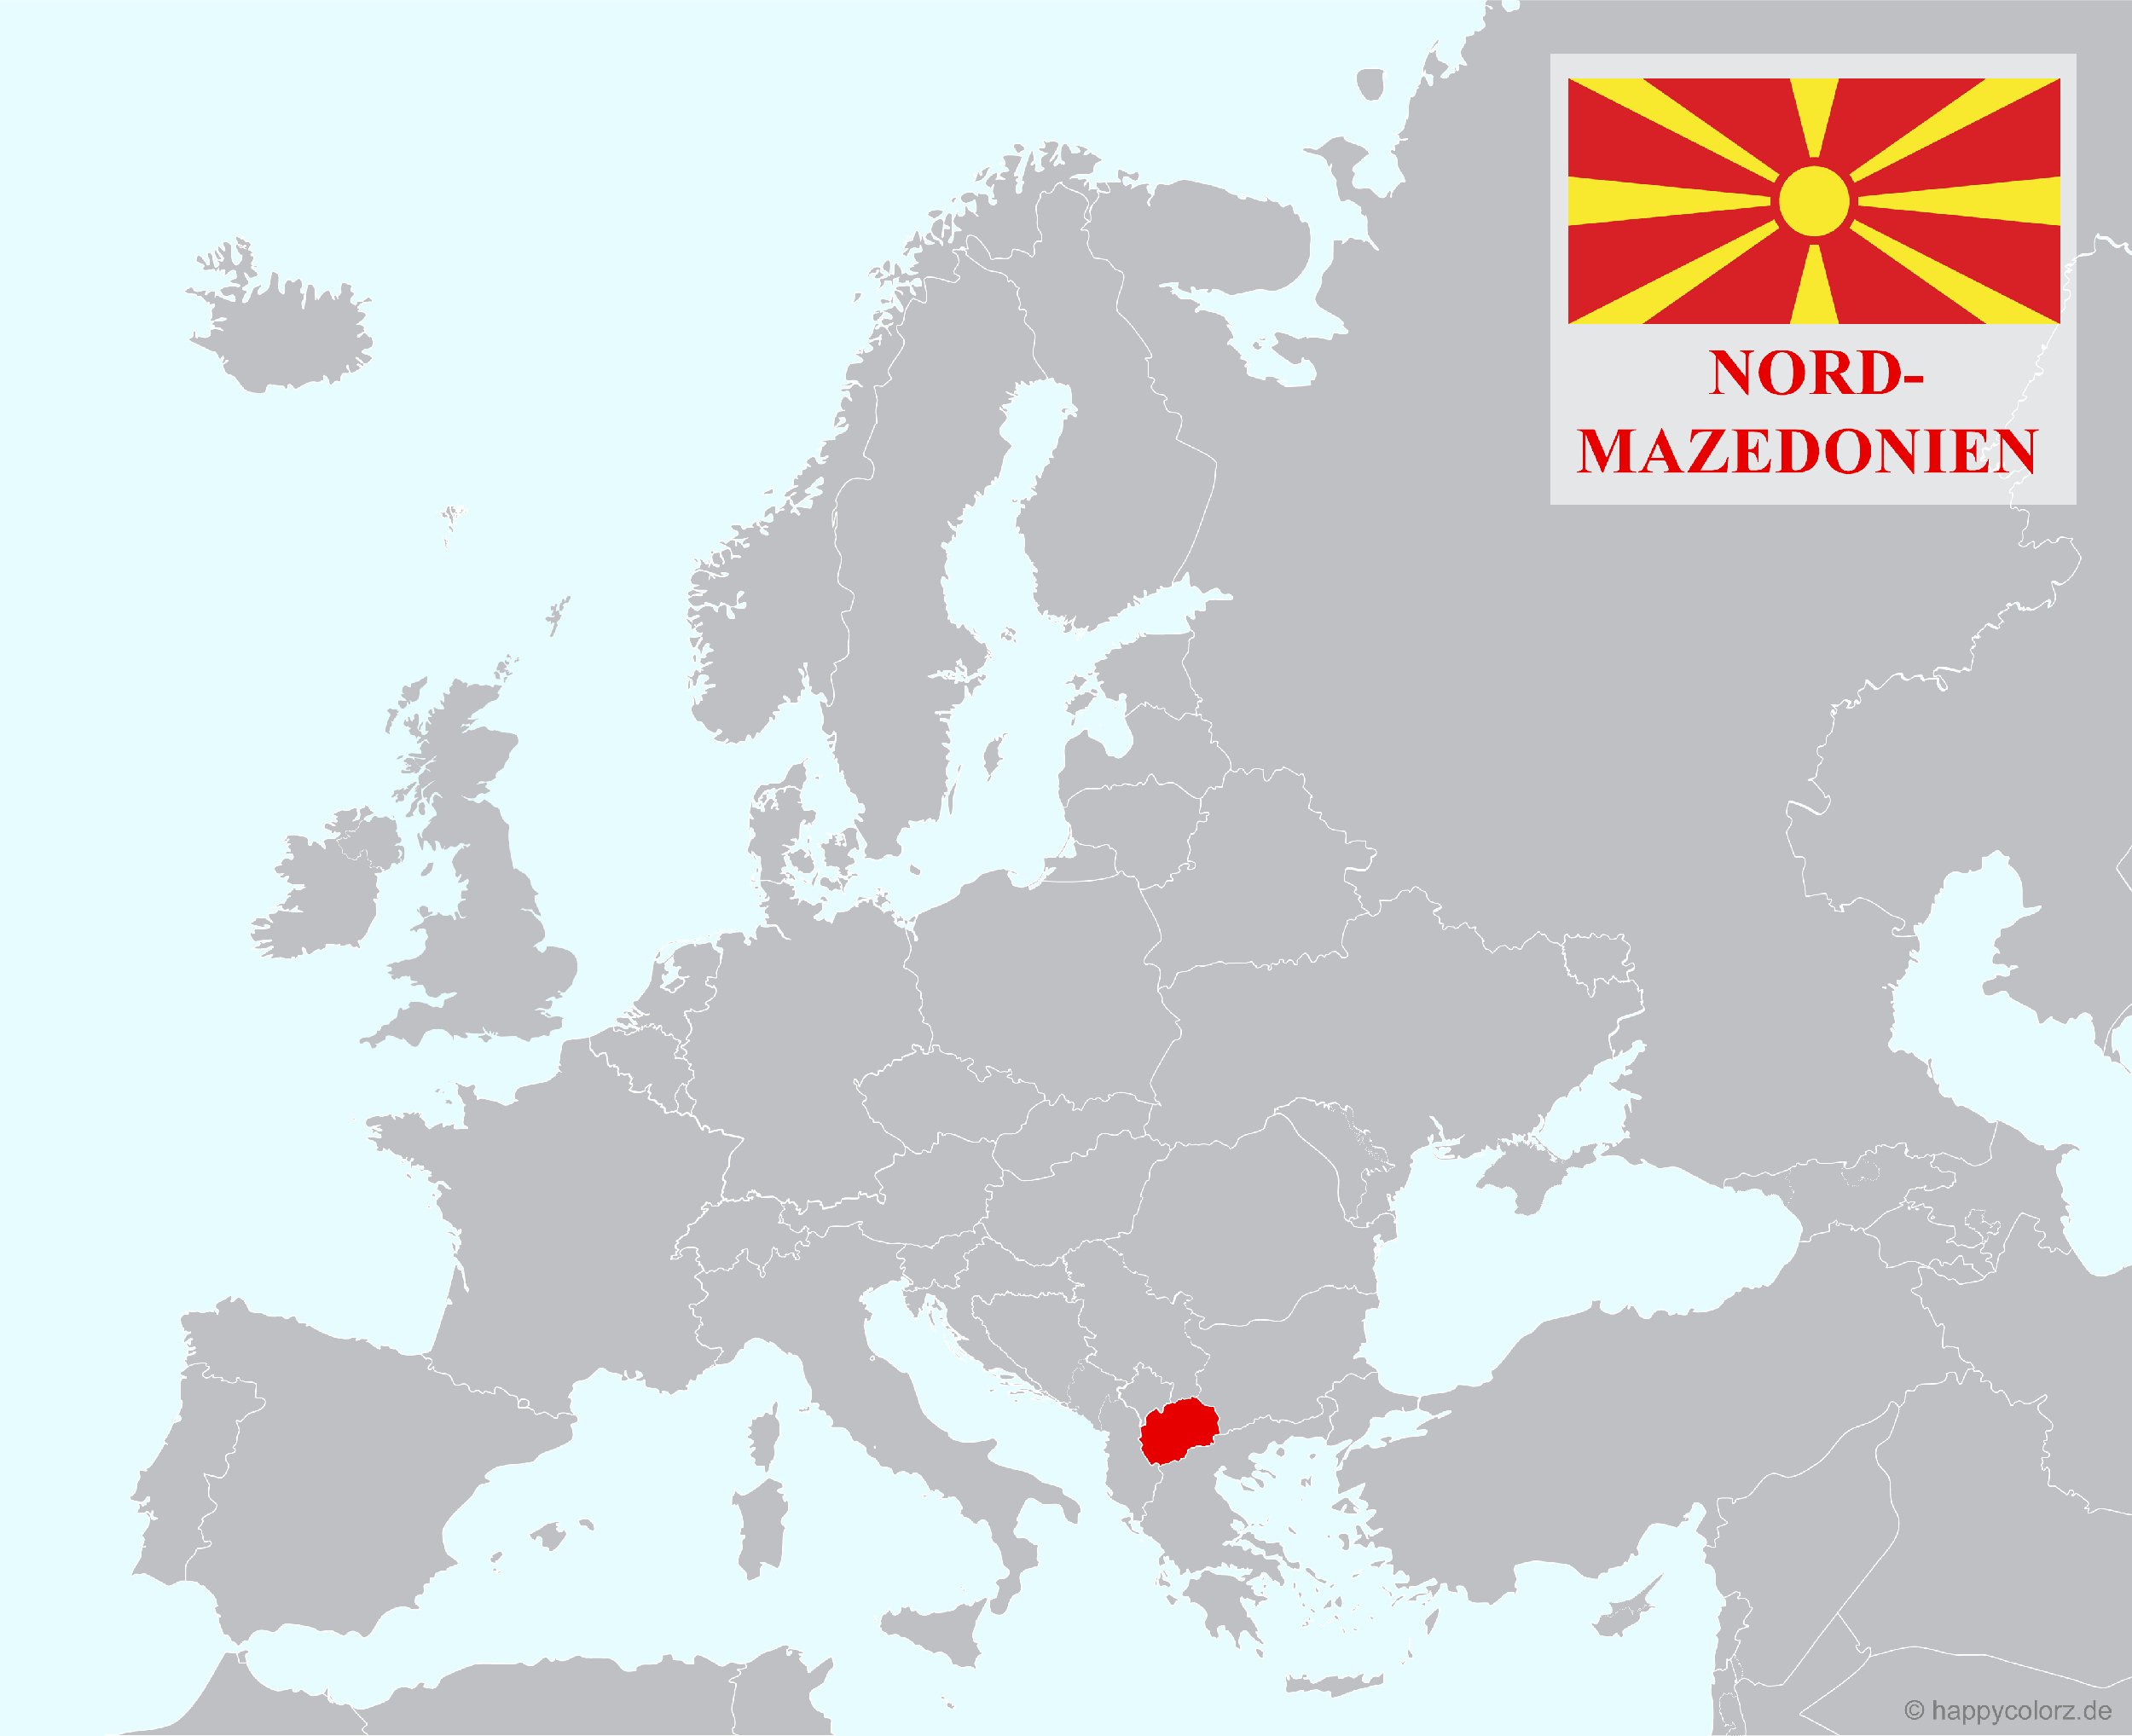 Europakarte mit Nordmazedonien als hervorgehobenes Land